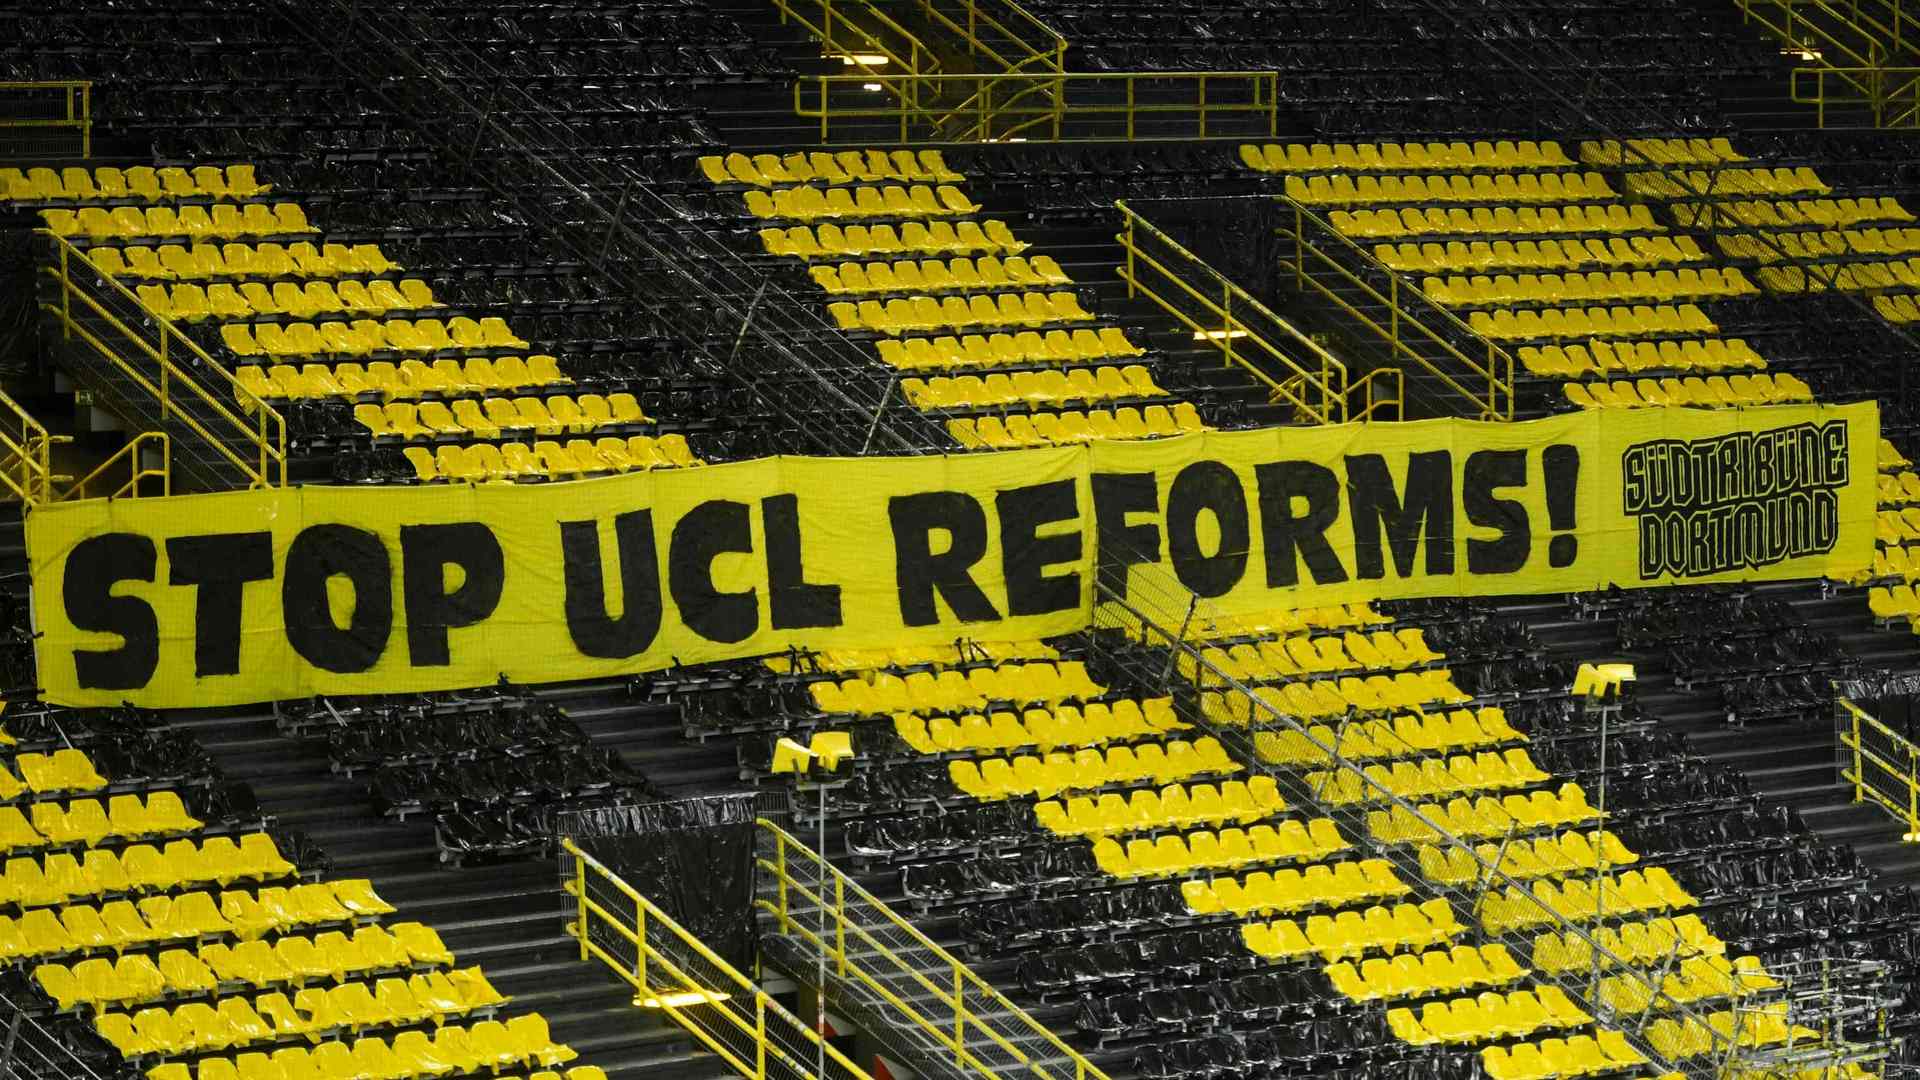 Dortmunder Fans mit klarer Ansage: Stopp die Reformen der Champions League!